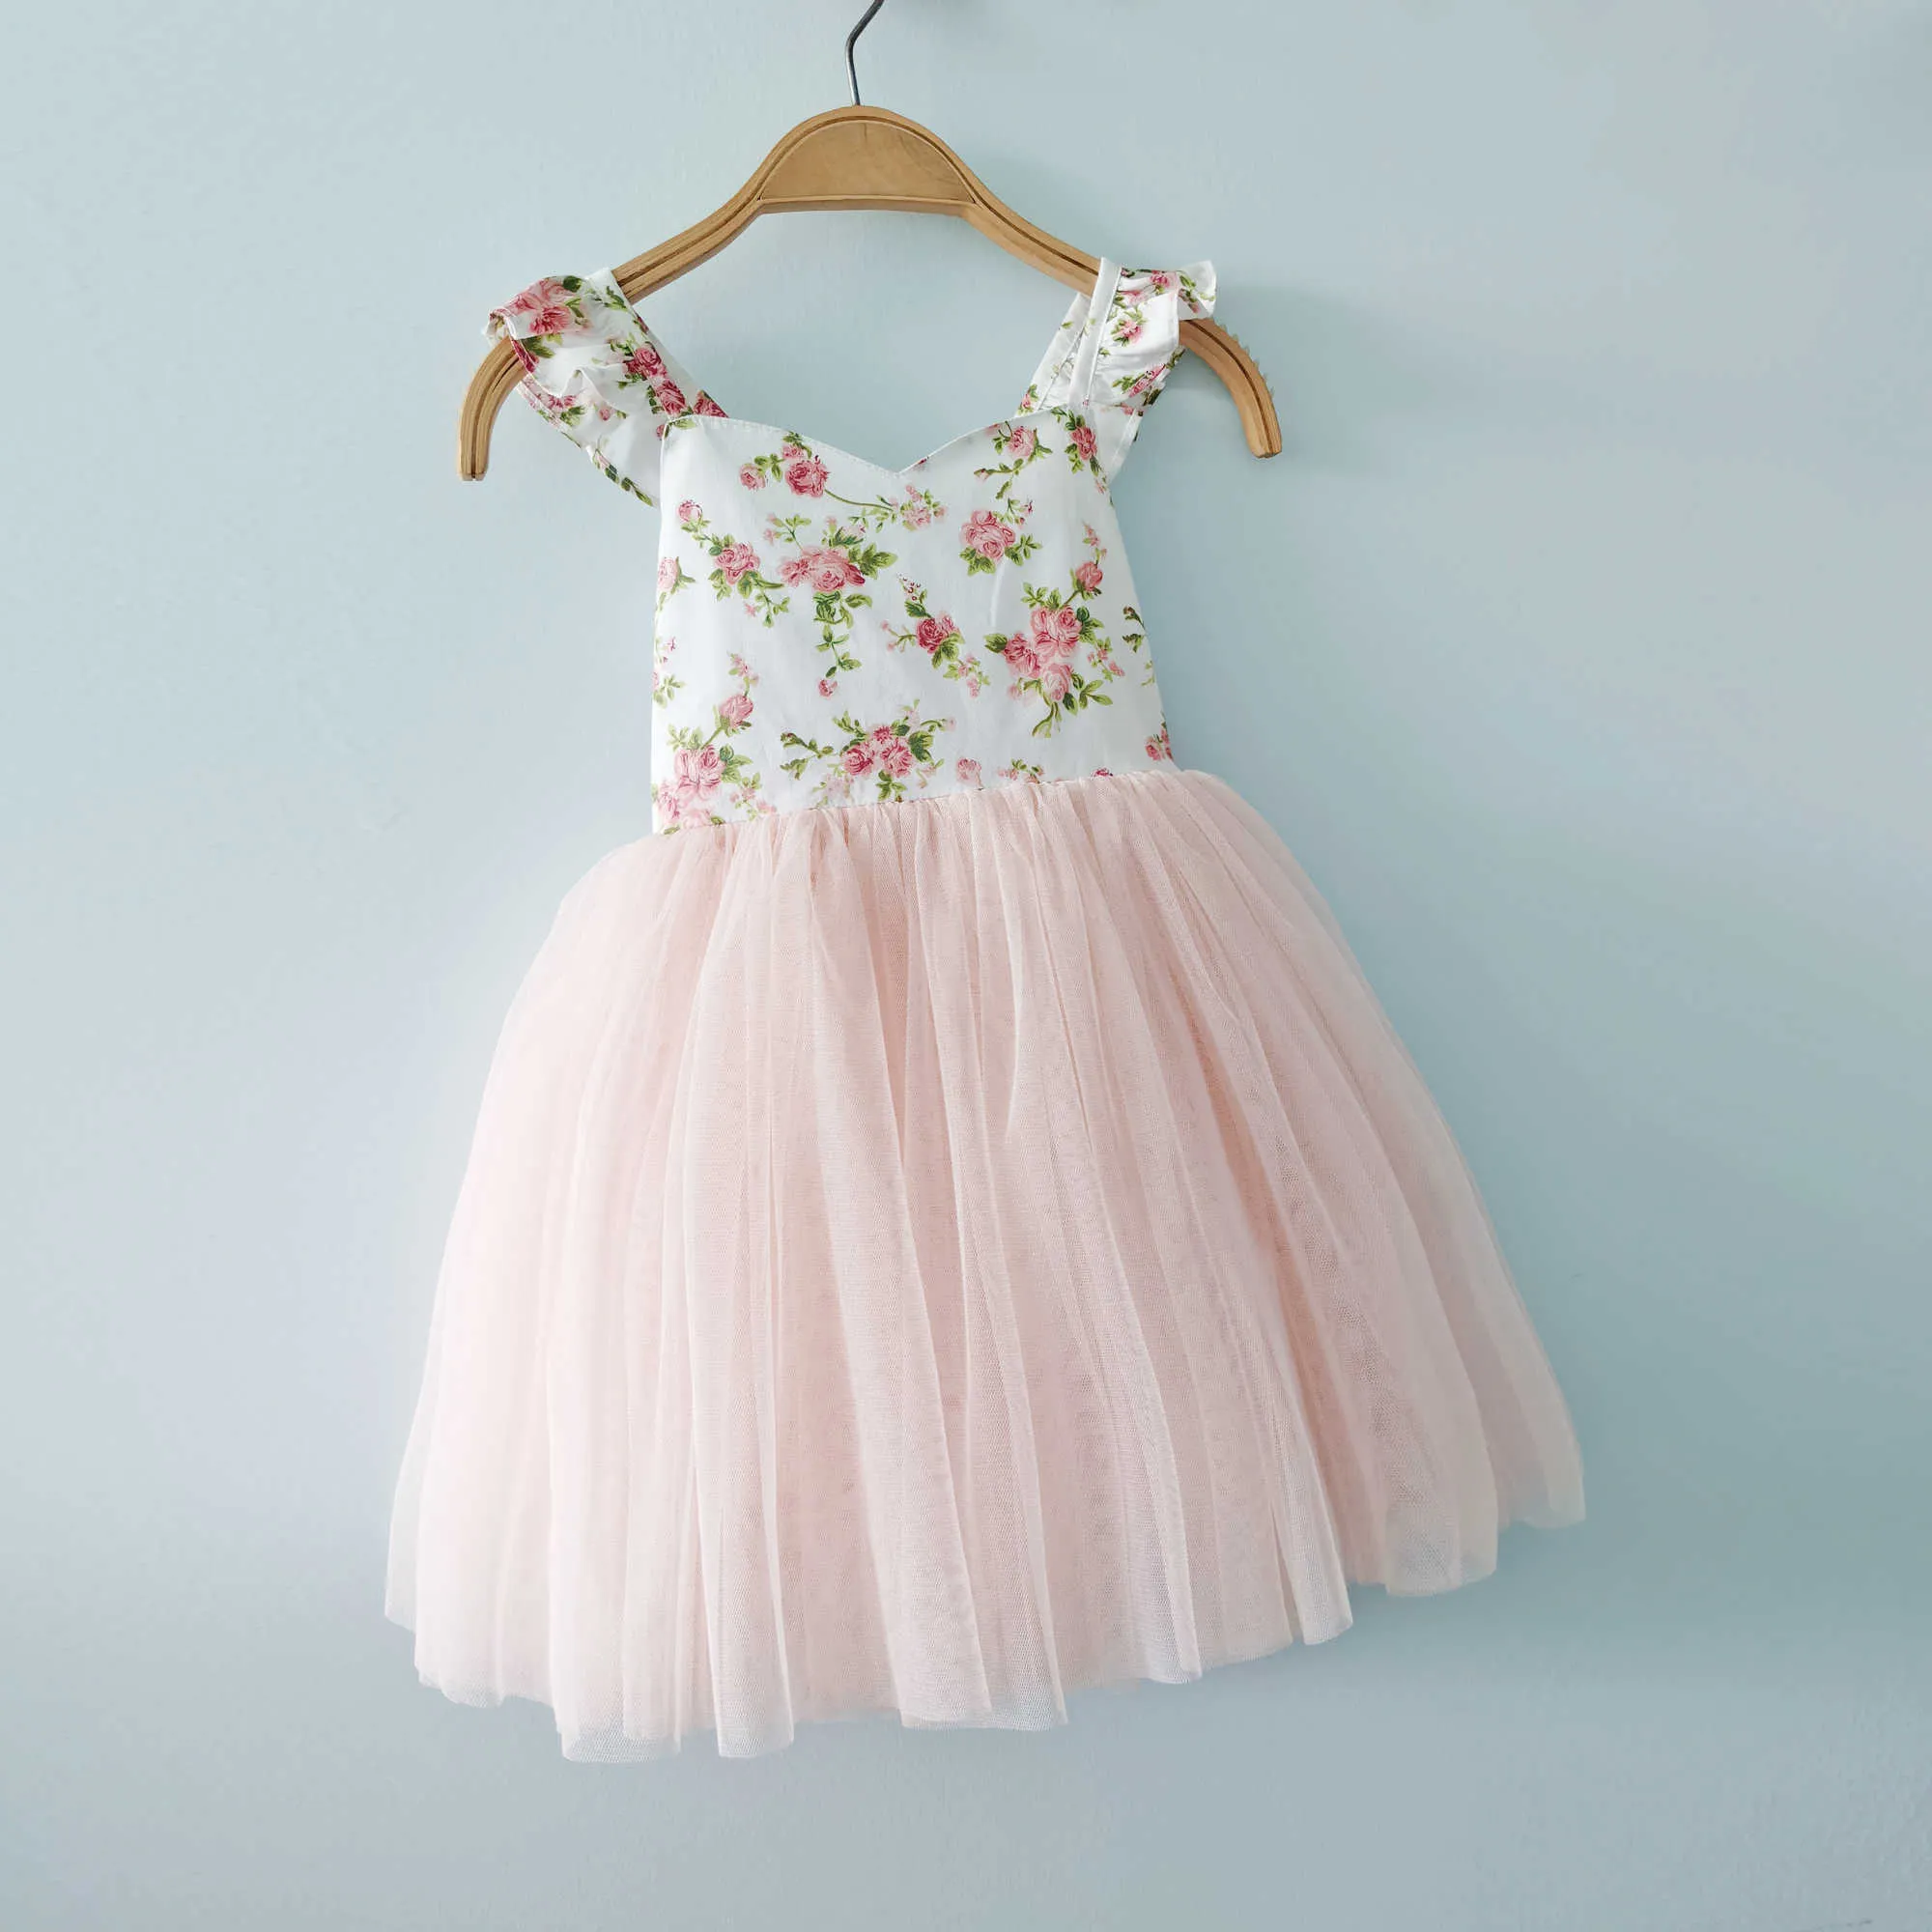 Flofallzique bebê meninas vestido 2020 Últimas moda estilo retro floral pétala manga princesa tutu roupas de Natal casamento q0716